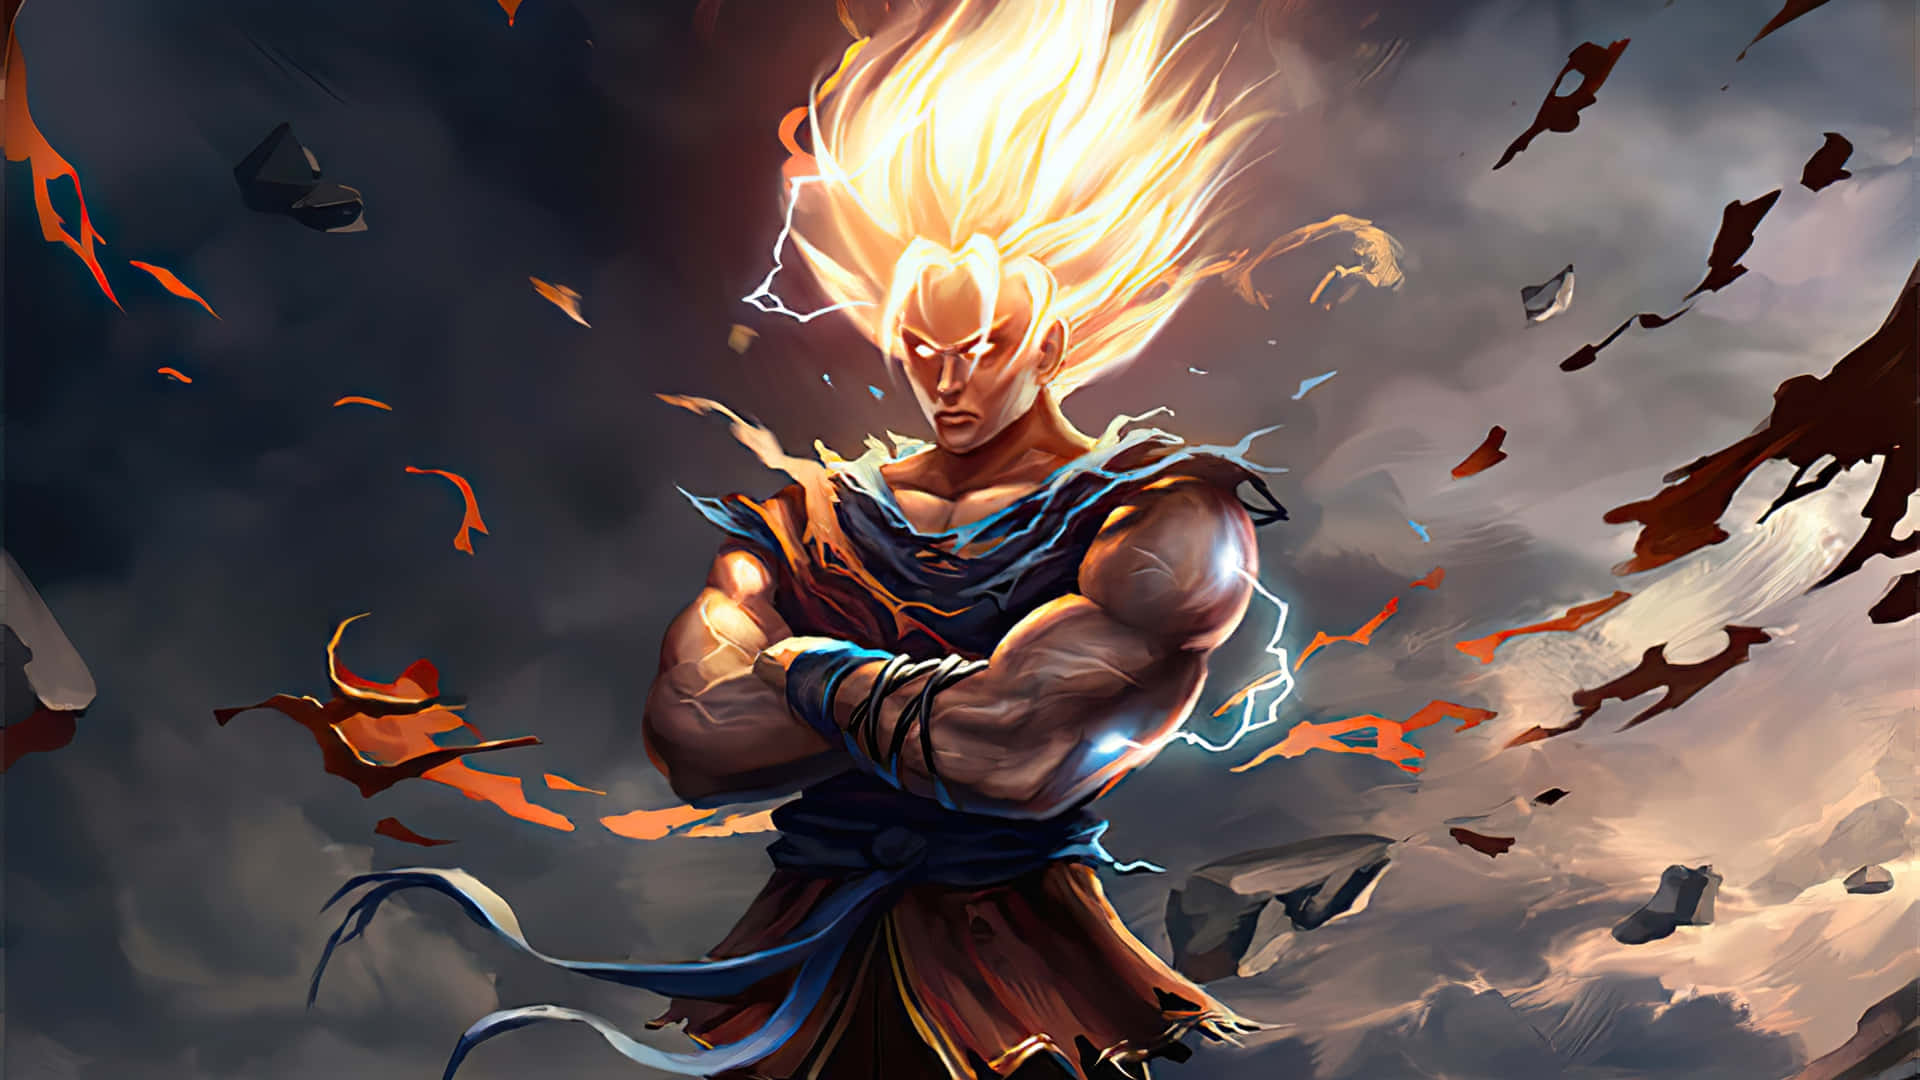 Goku conquering enemies with Super Saiyan power